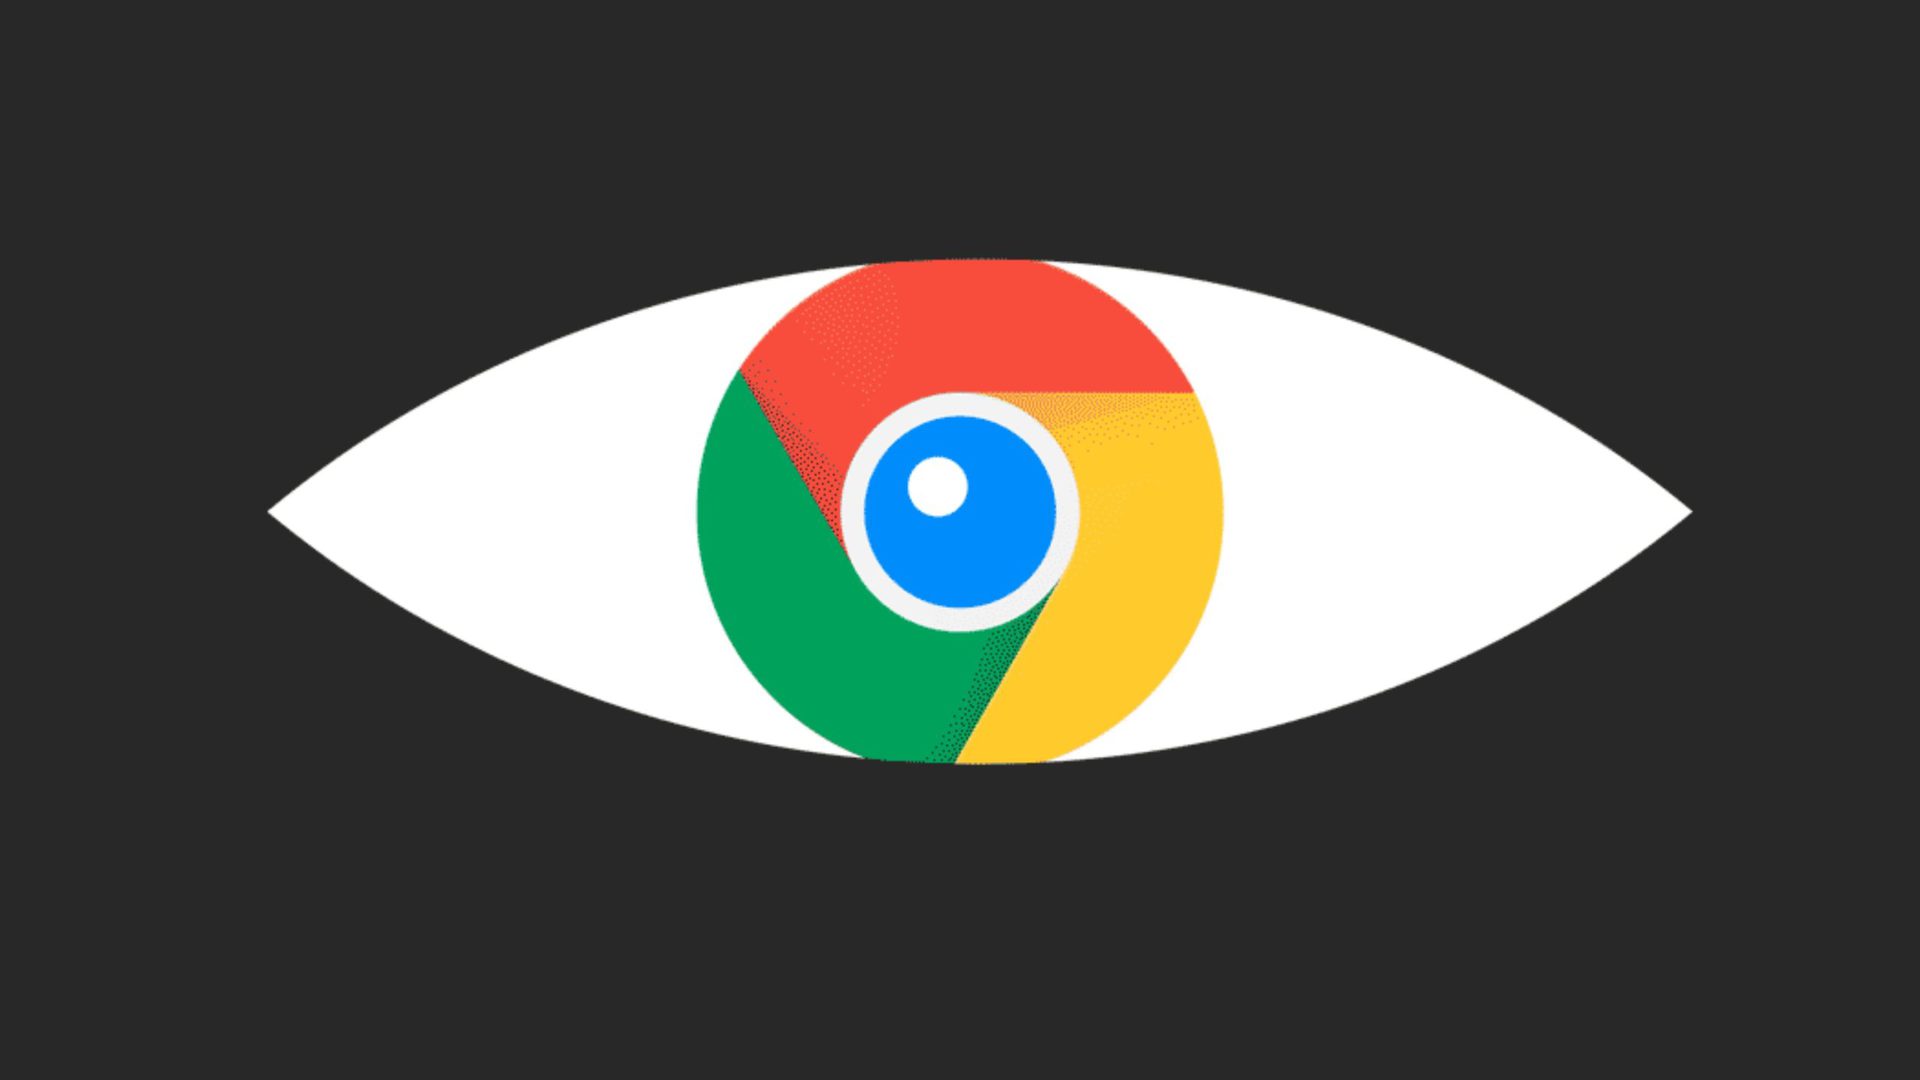 Google FLoC spy graphic showing the Google Chrome logo as as eye